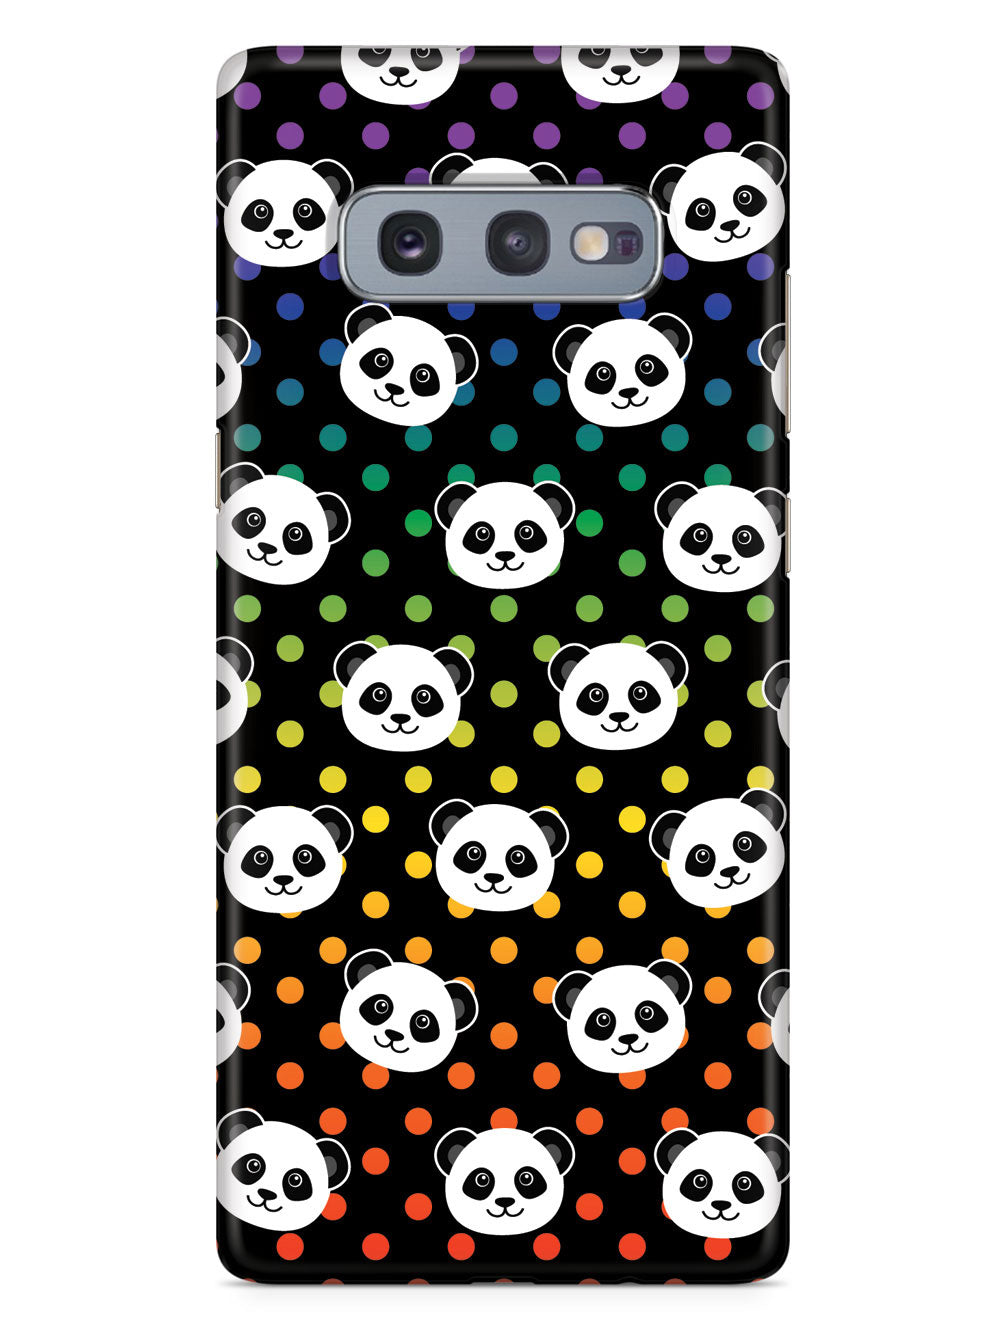 Cute Panda Pattern - Rainbow Polka Dots - Black Case